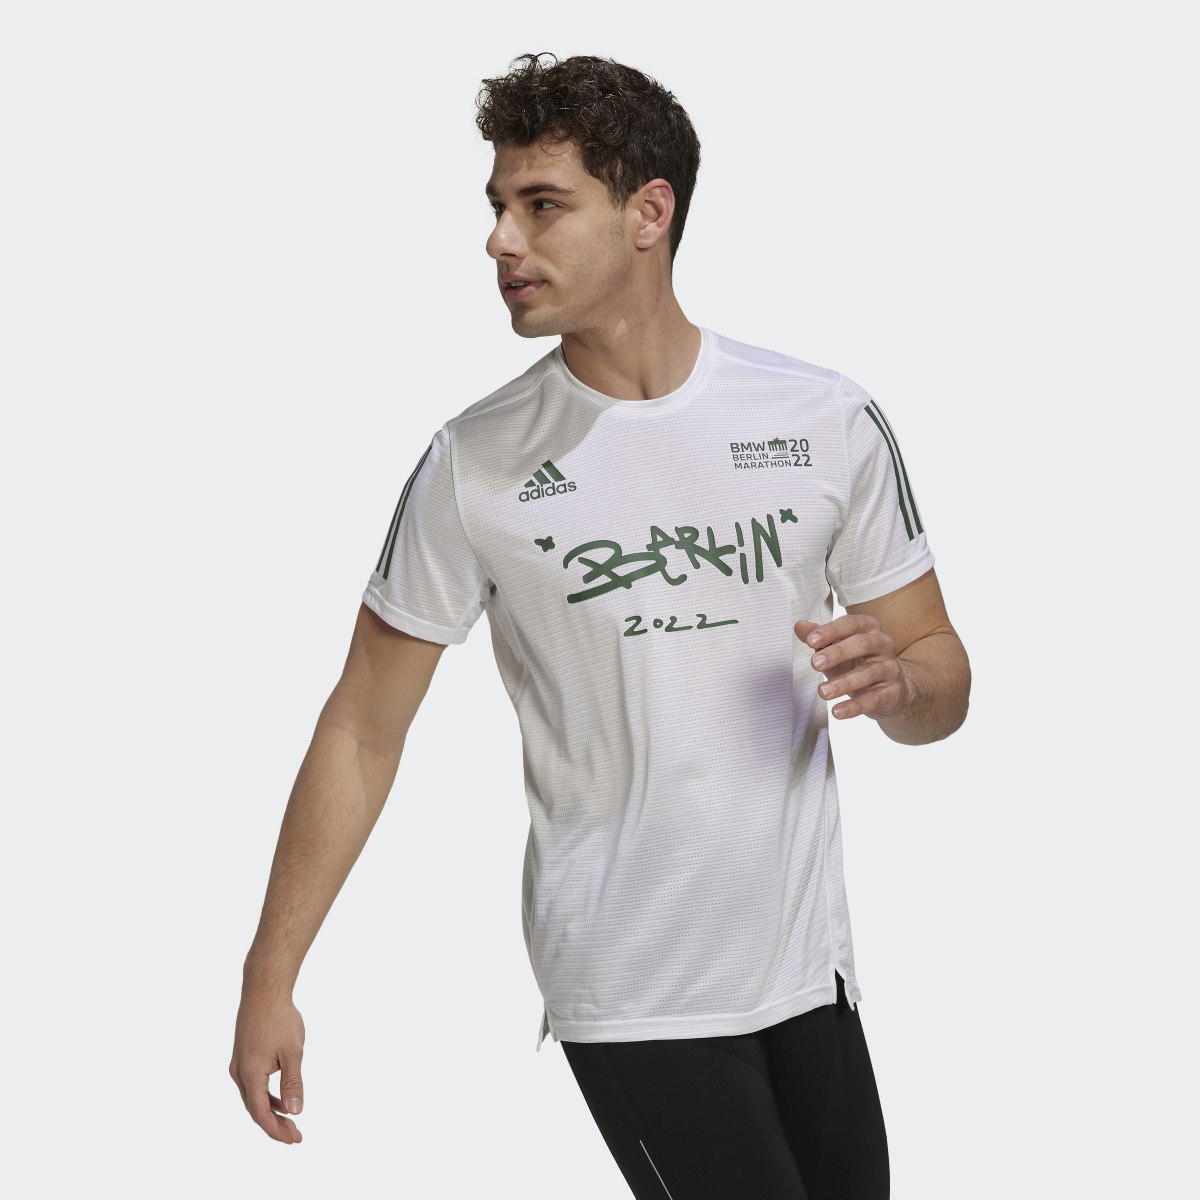 Adidas T-shirt Berlin Marathon 2022. 4